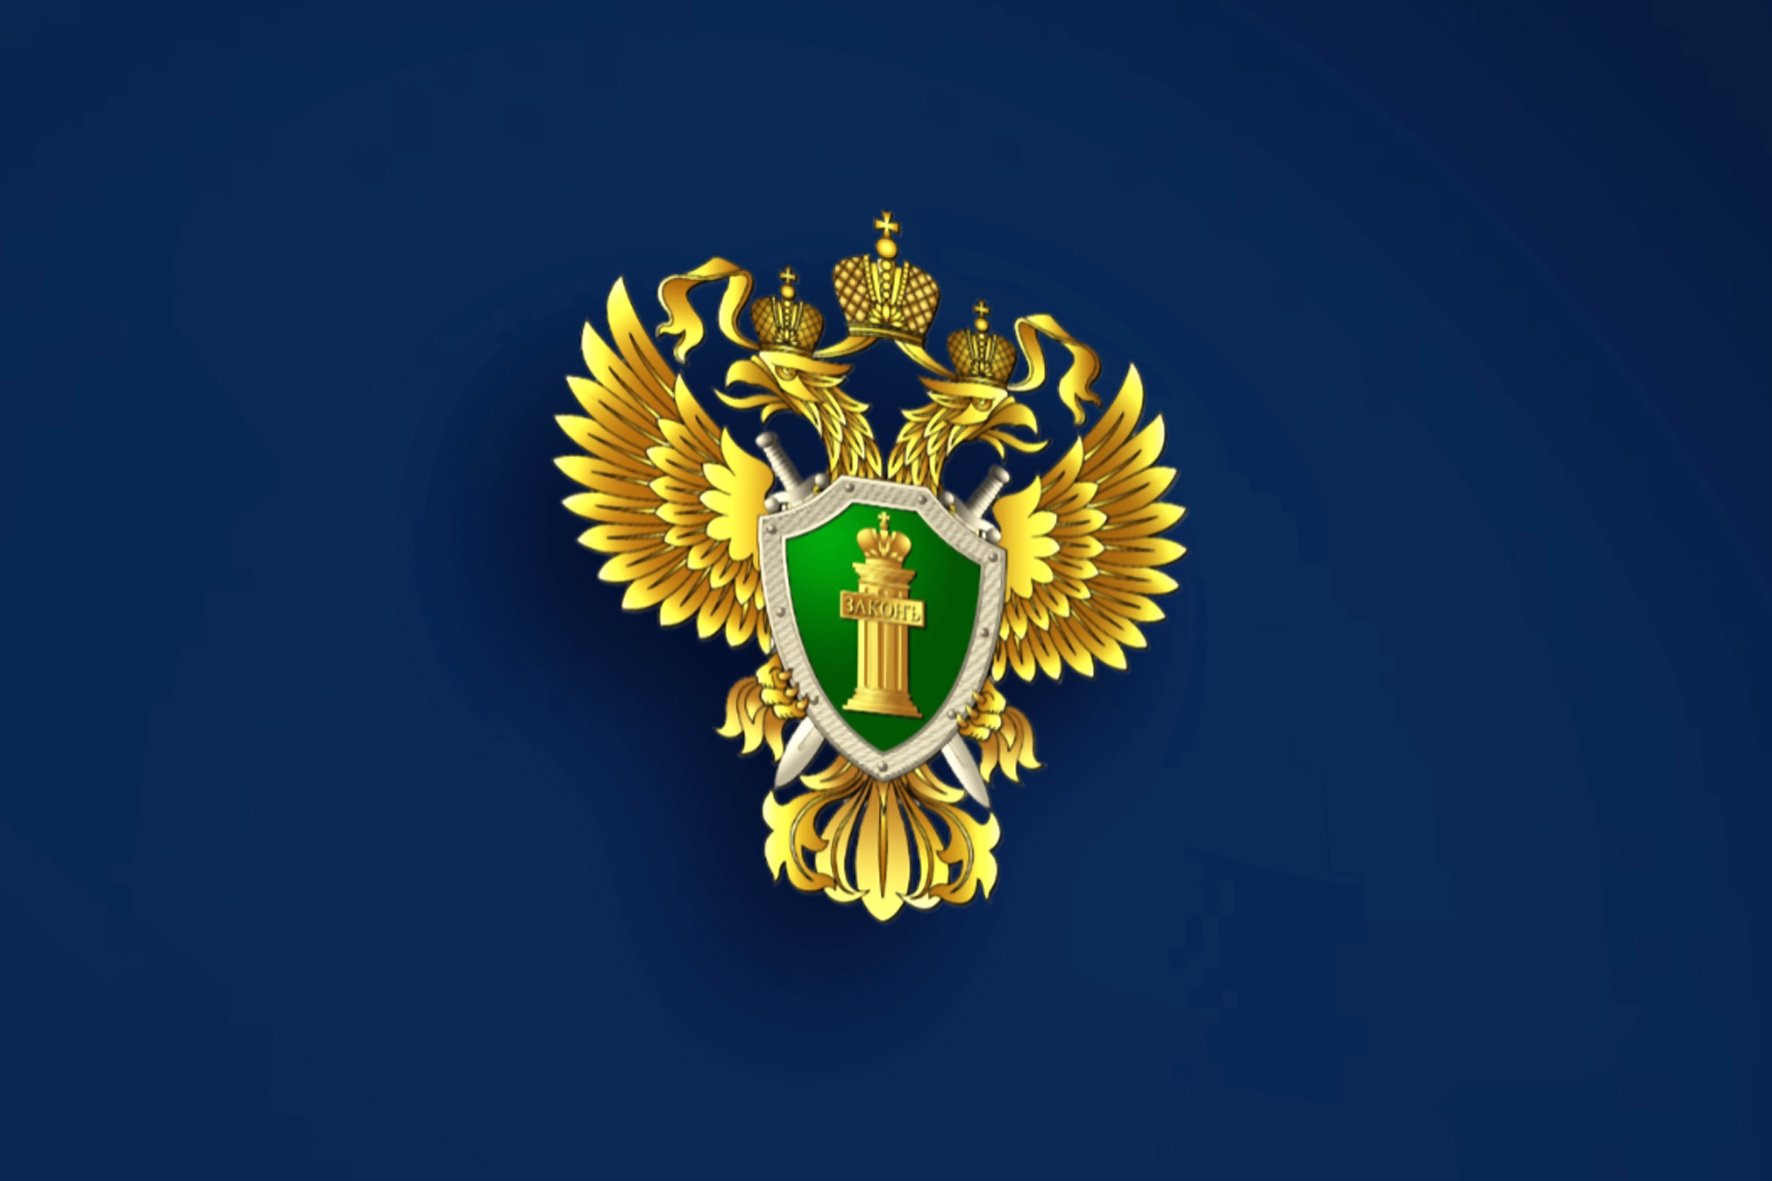 герб прокуратуры фото